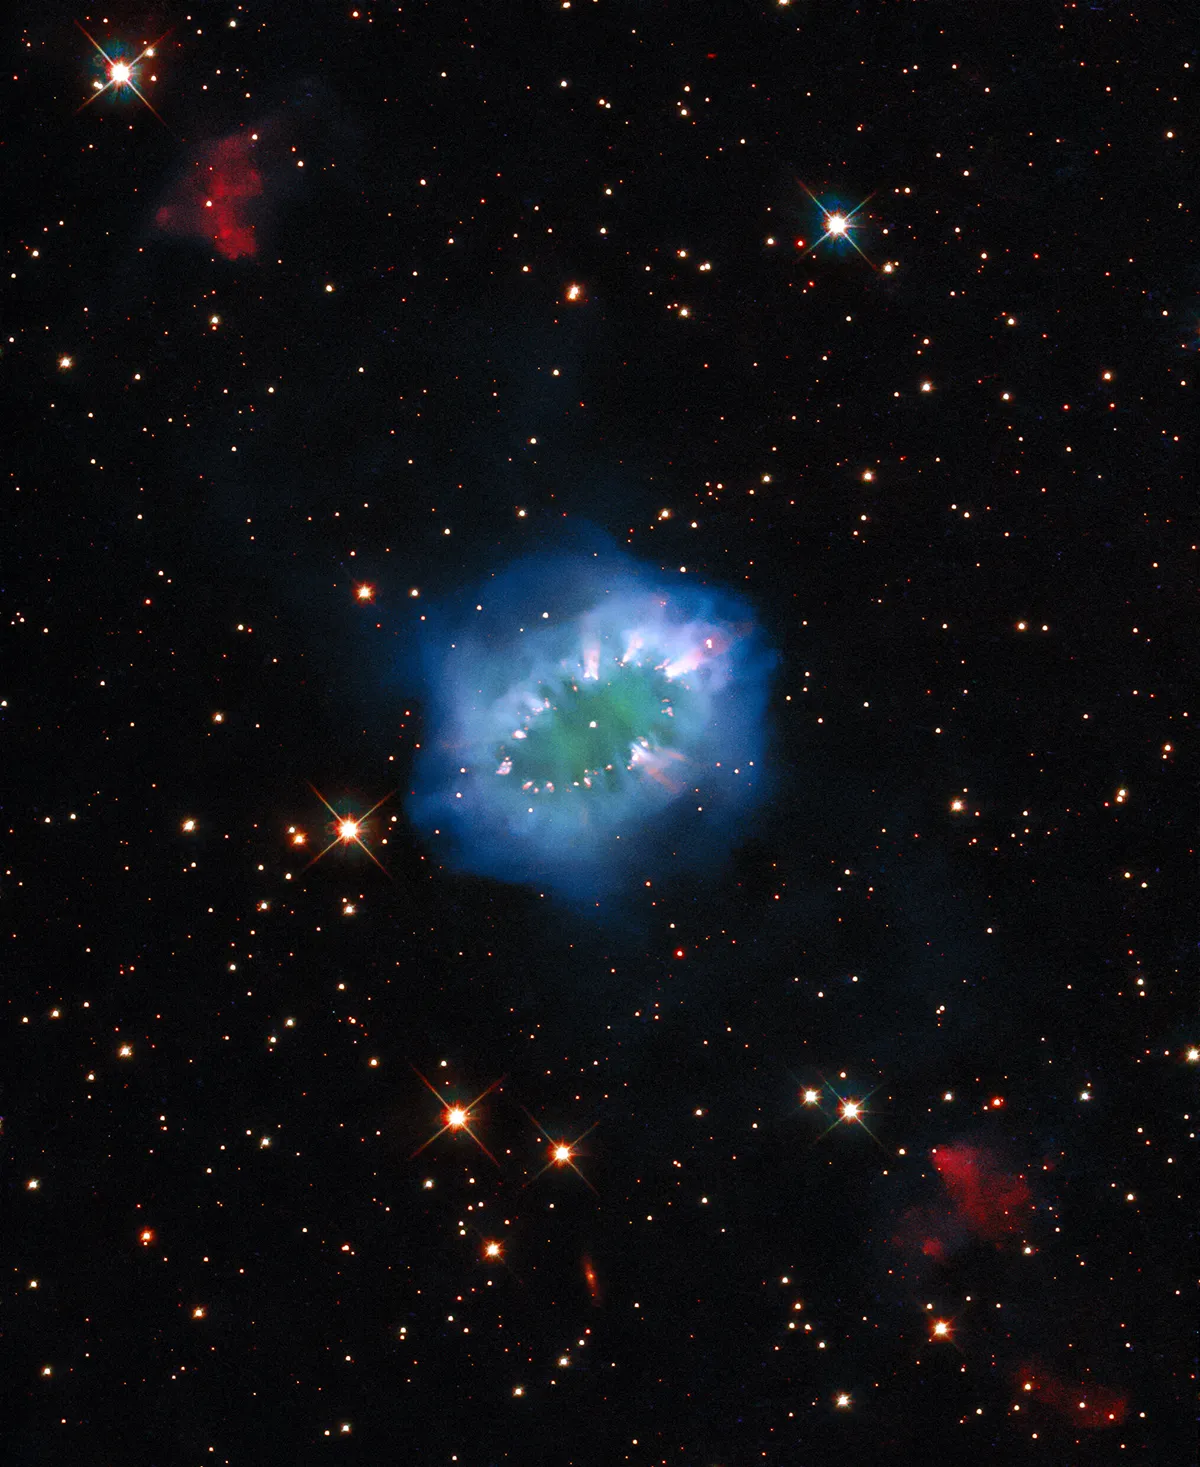 The Necklace Nebula, PN G054.2-03.4. HUBBLE SPACE TELESCOPE, 26 APRIL 2021. IMAGE CREDIT: ESA/Hubble & NASA, K. Noll